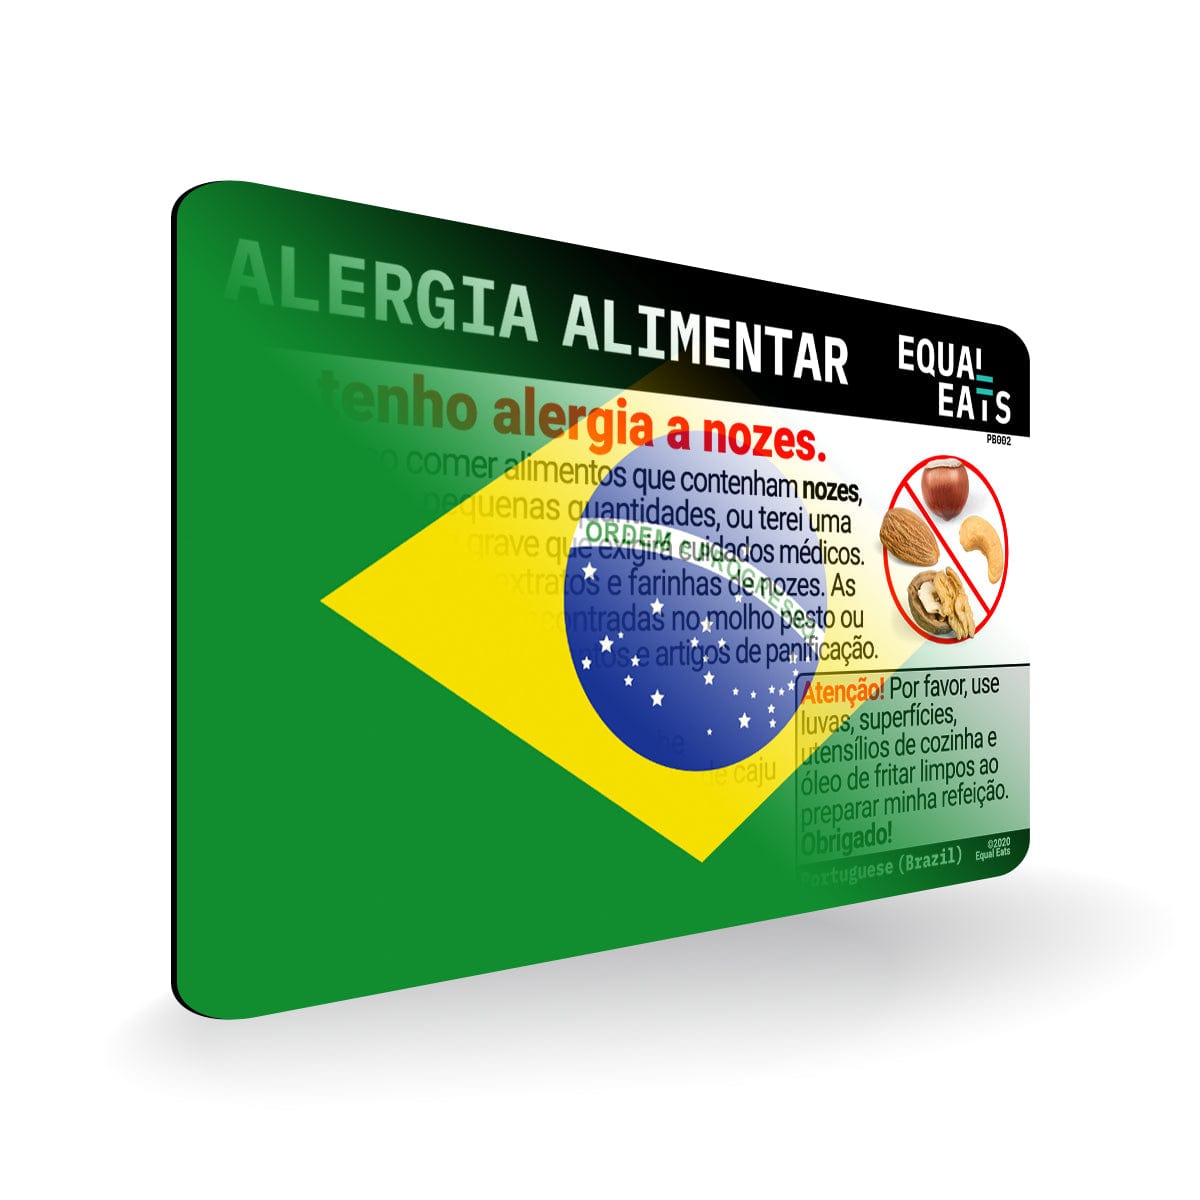 Portuguese (Brazil) Tree Nut Allergy Card